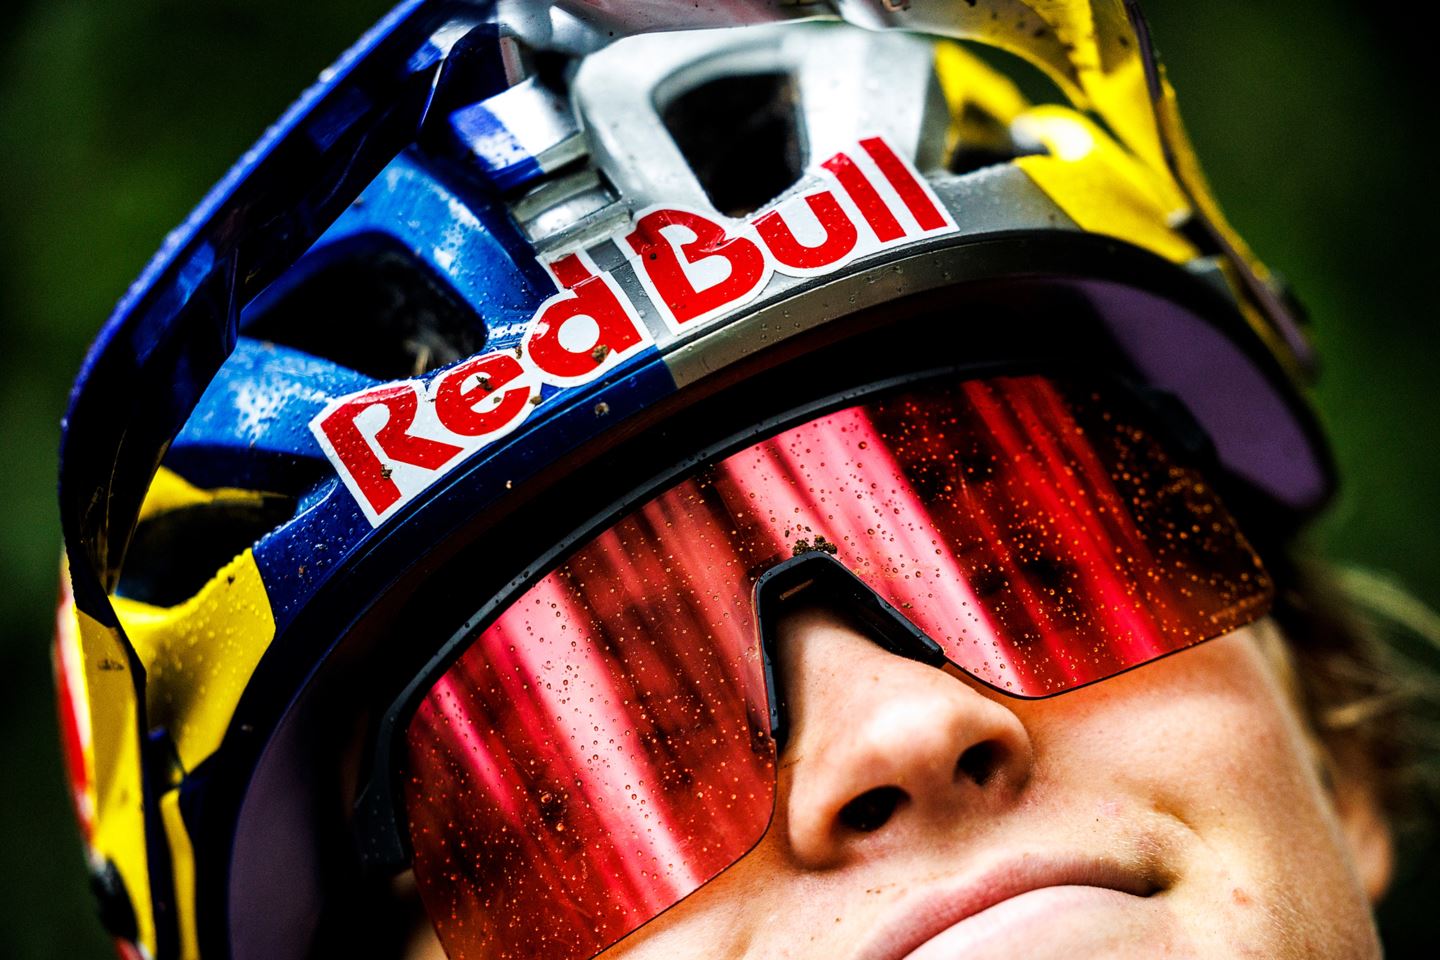 Close-up shot of Vali Höll smiling in the rain wearing her Red Bull helmet.